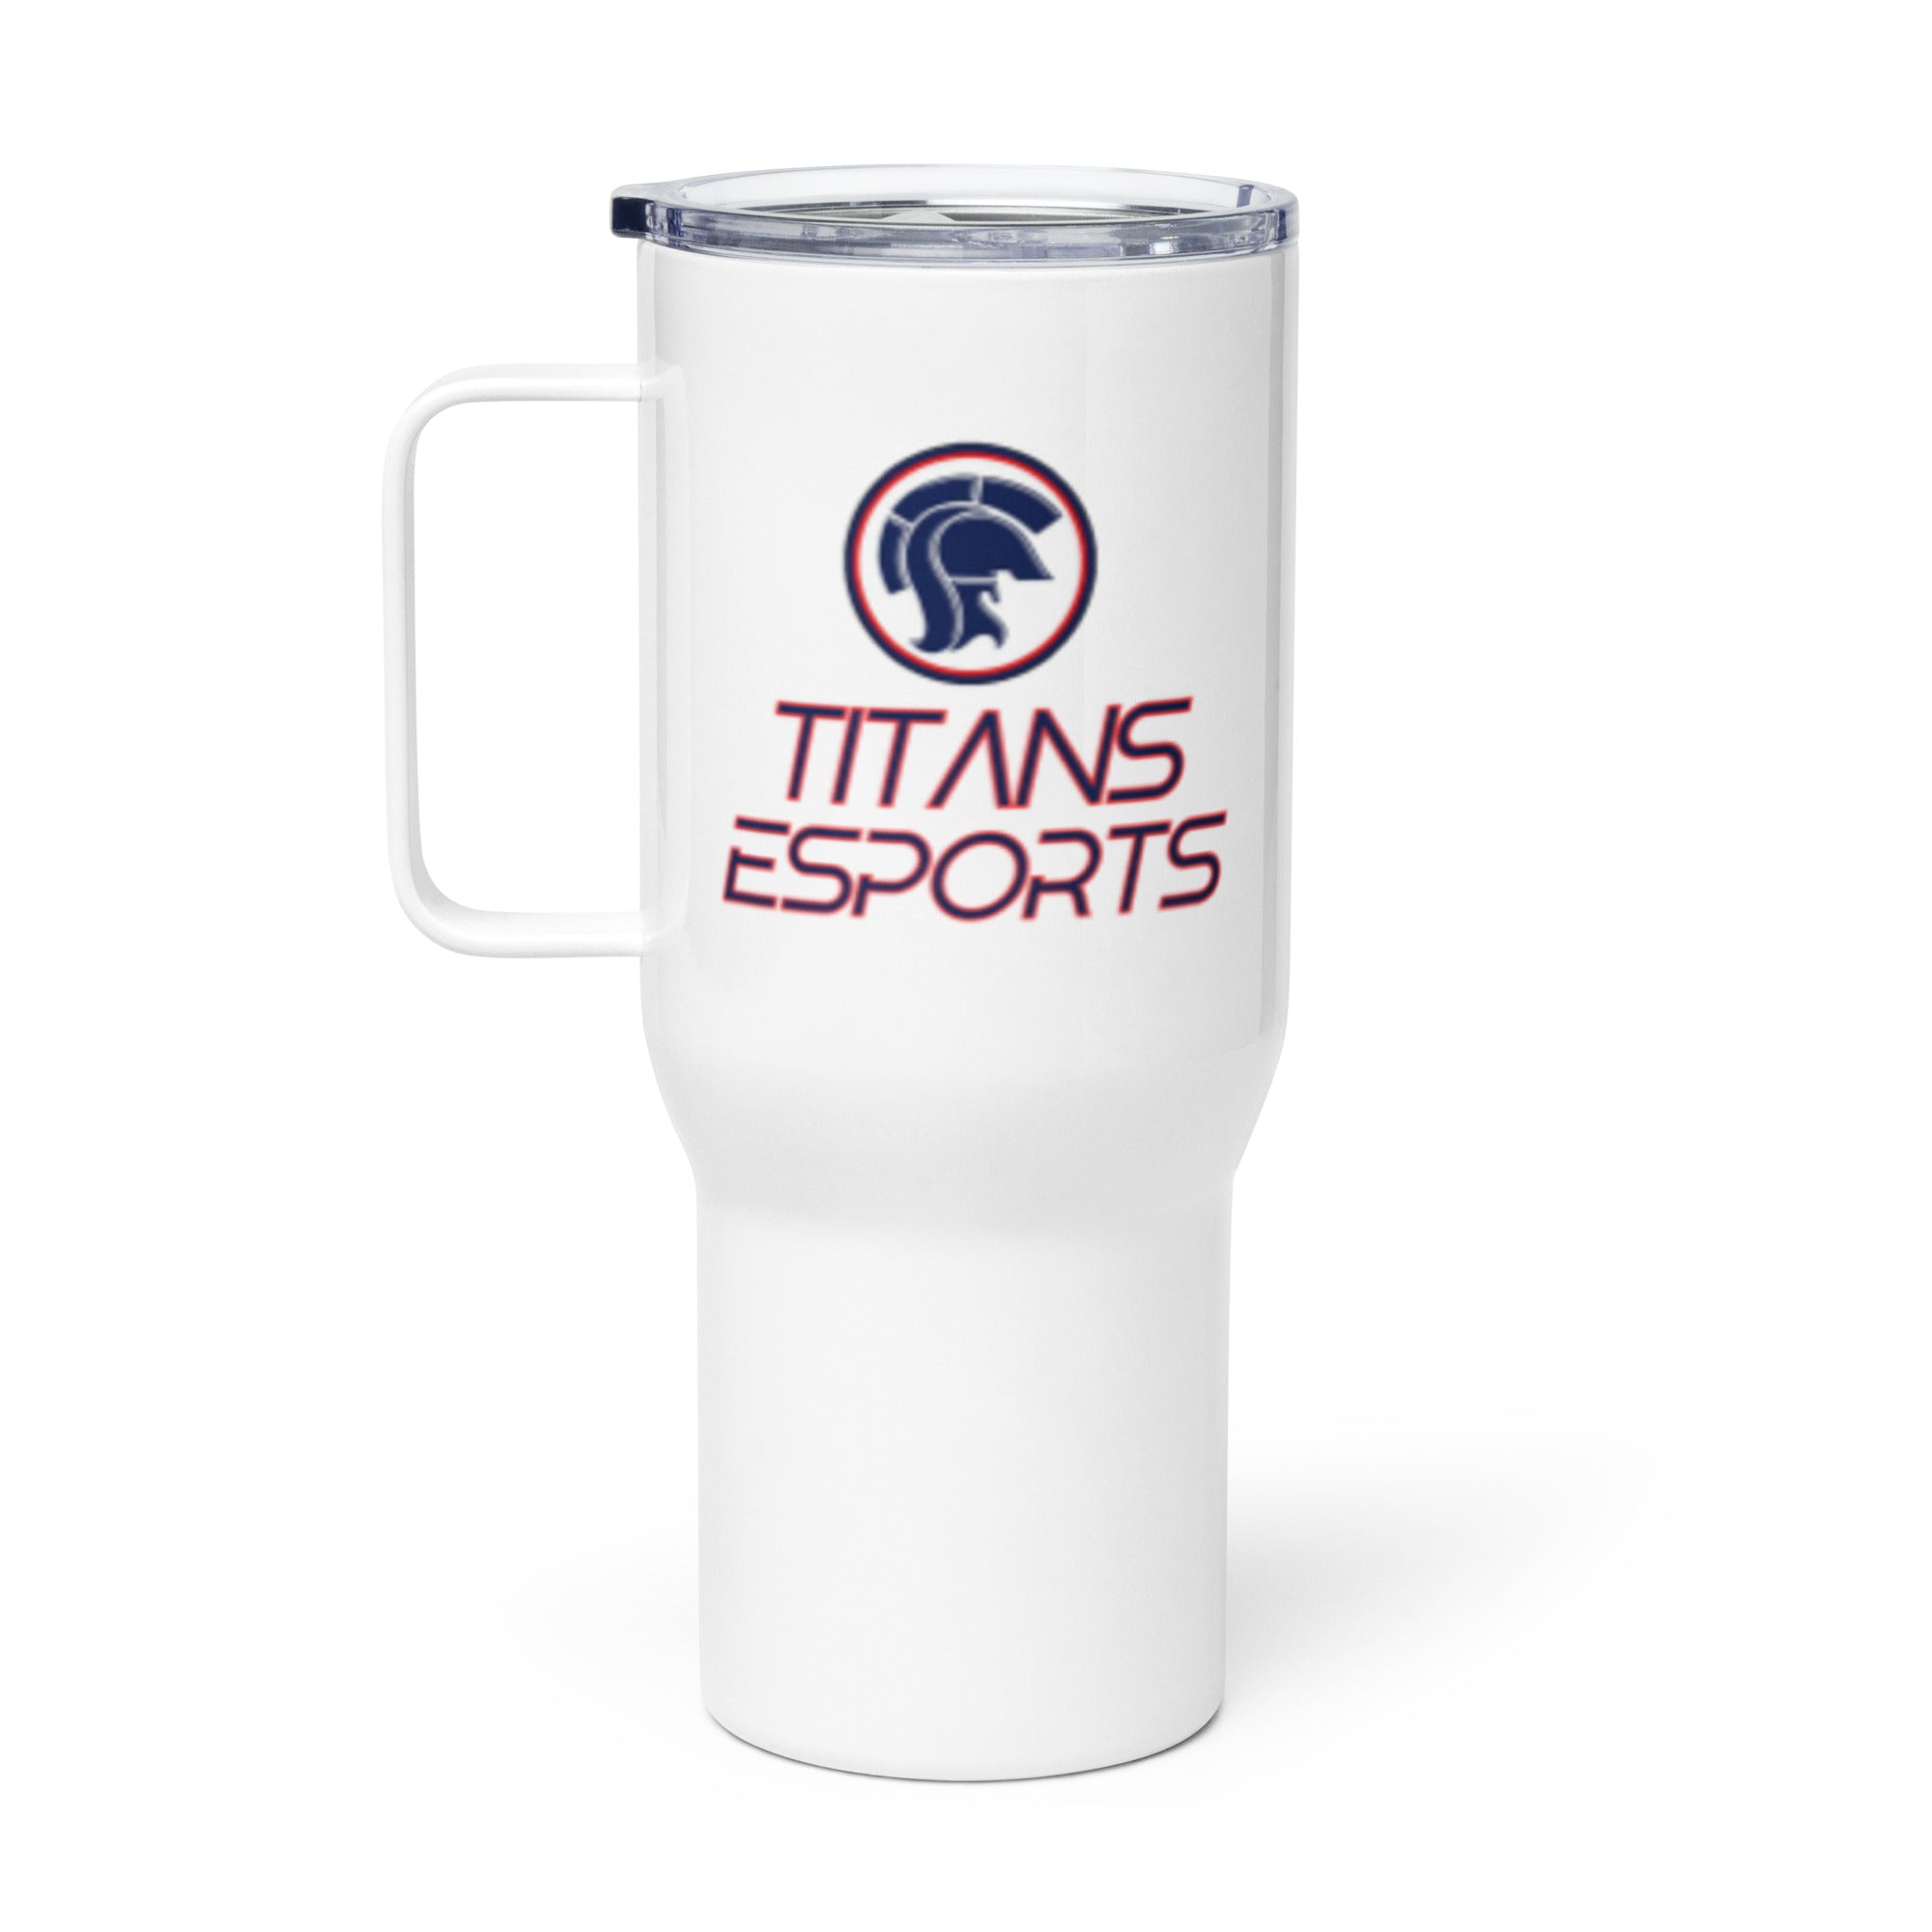 Titans Esports Travel Mug